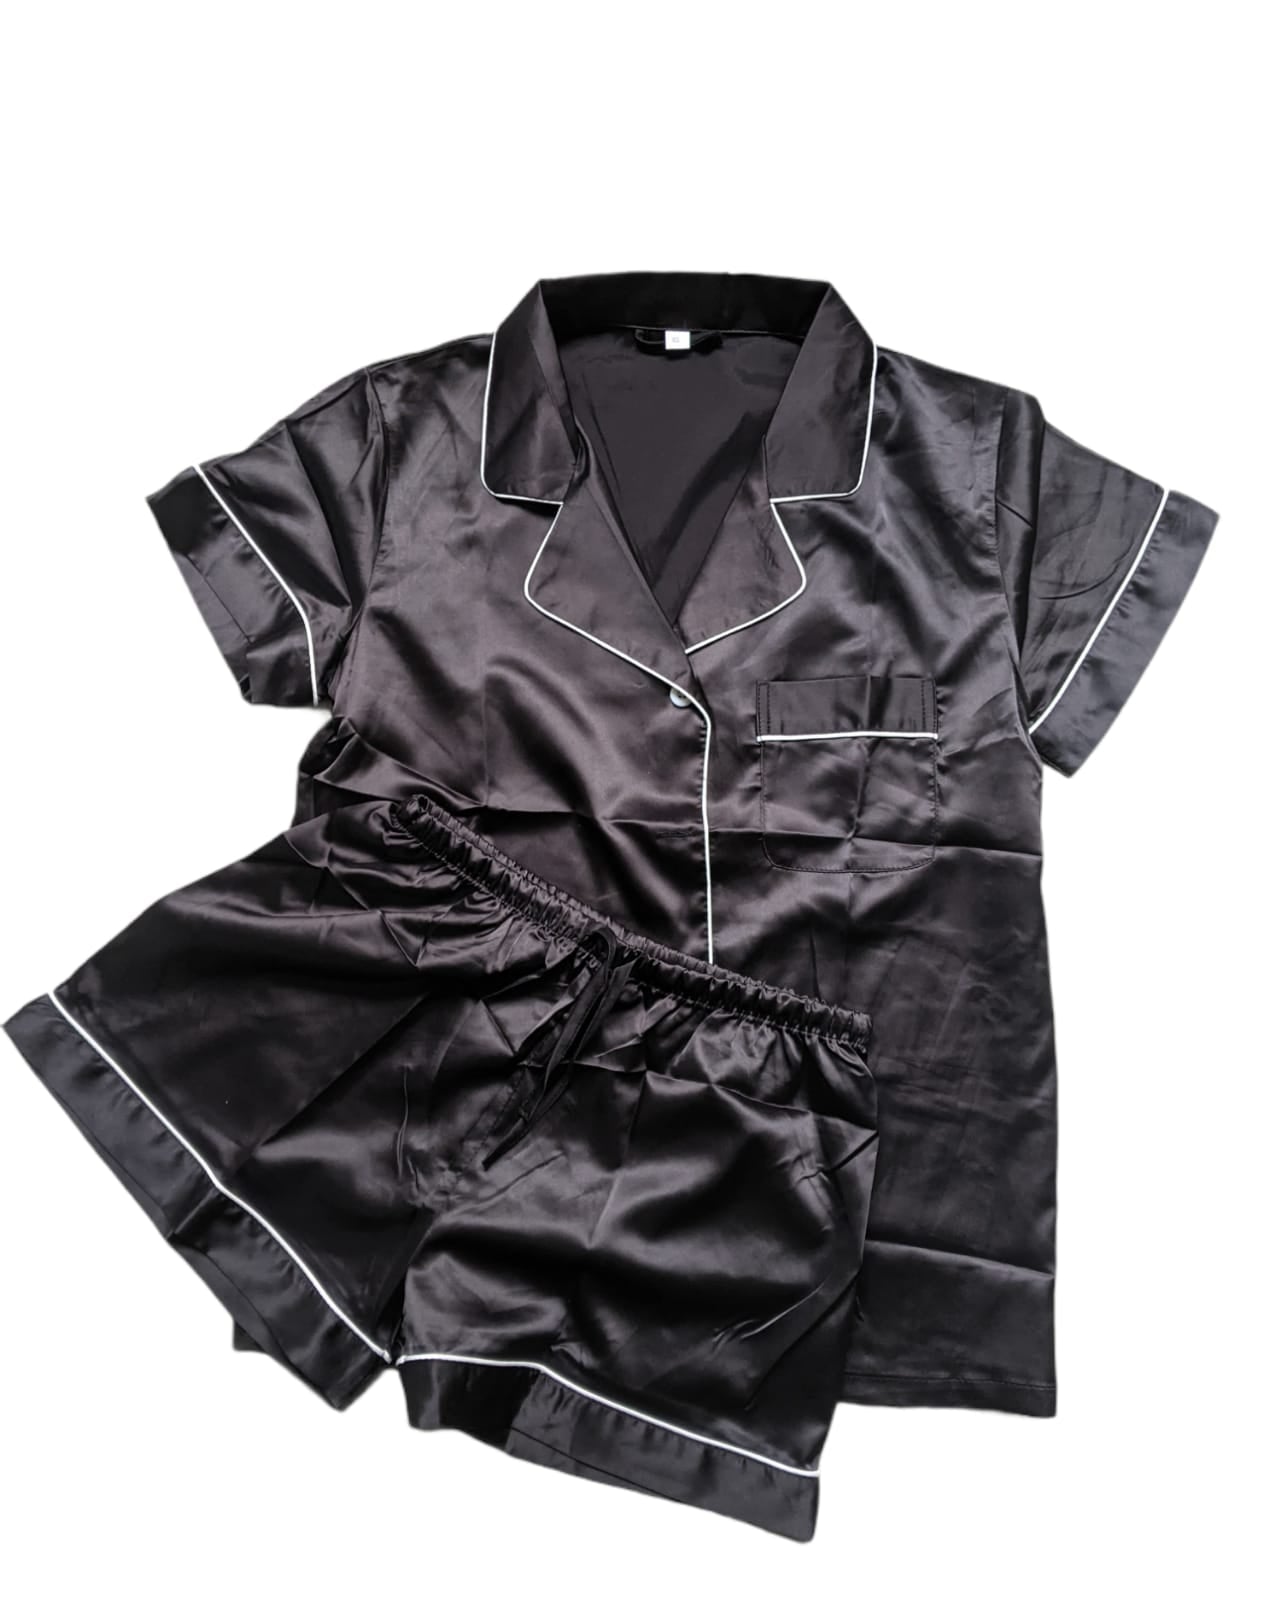 Satin Personalised Pyjama Set - Black and White